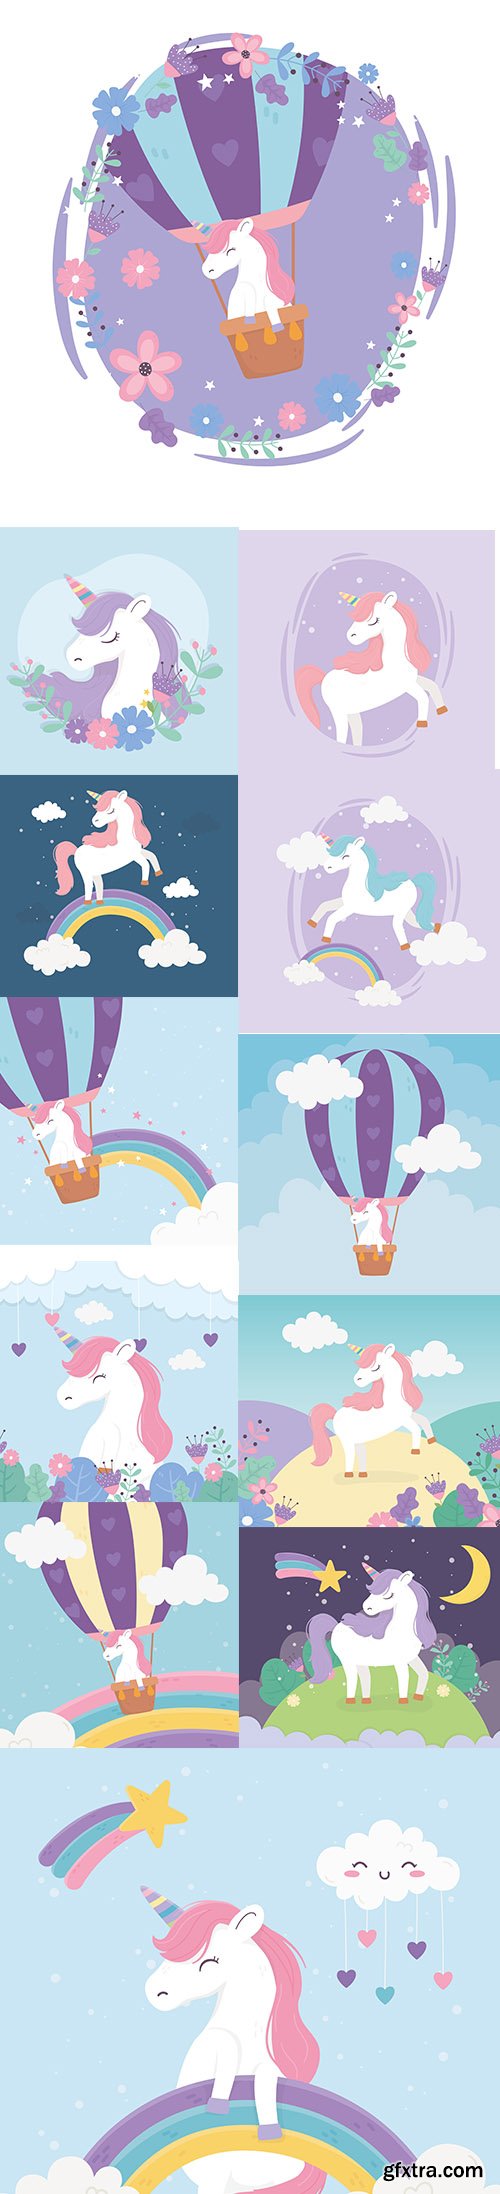 Happy Unicorn with Rainbows Illustrations Vector Set